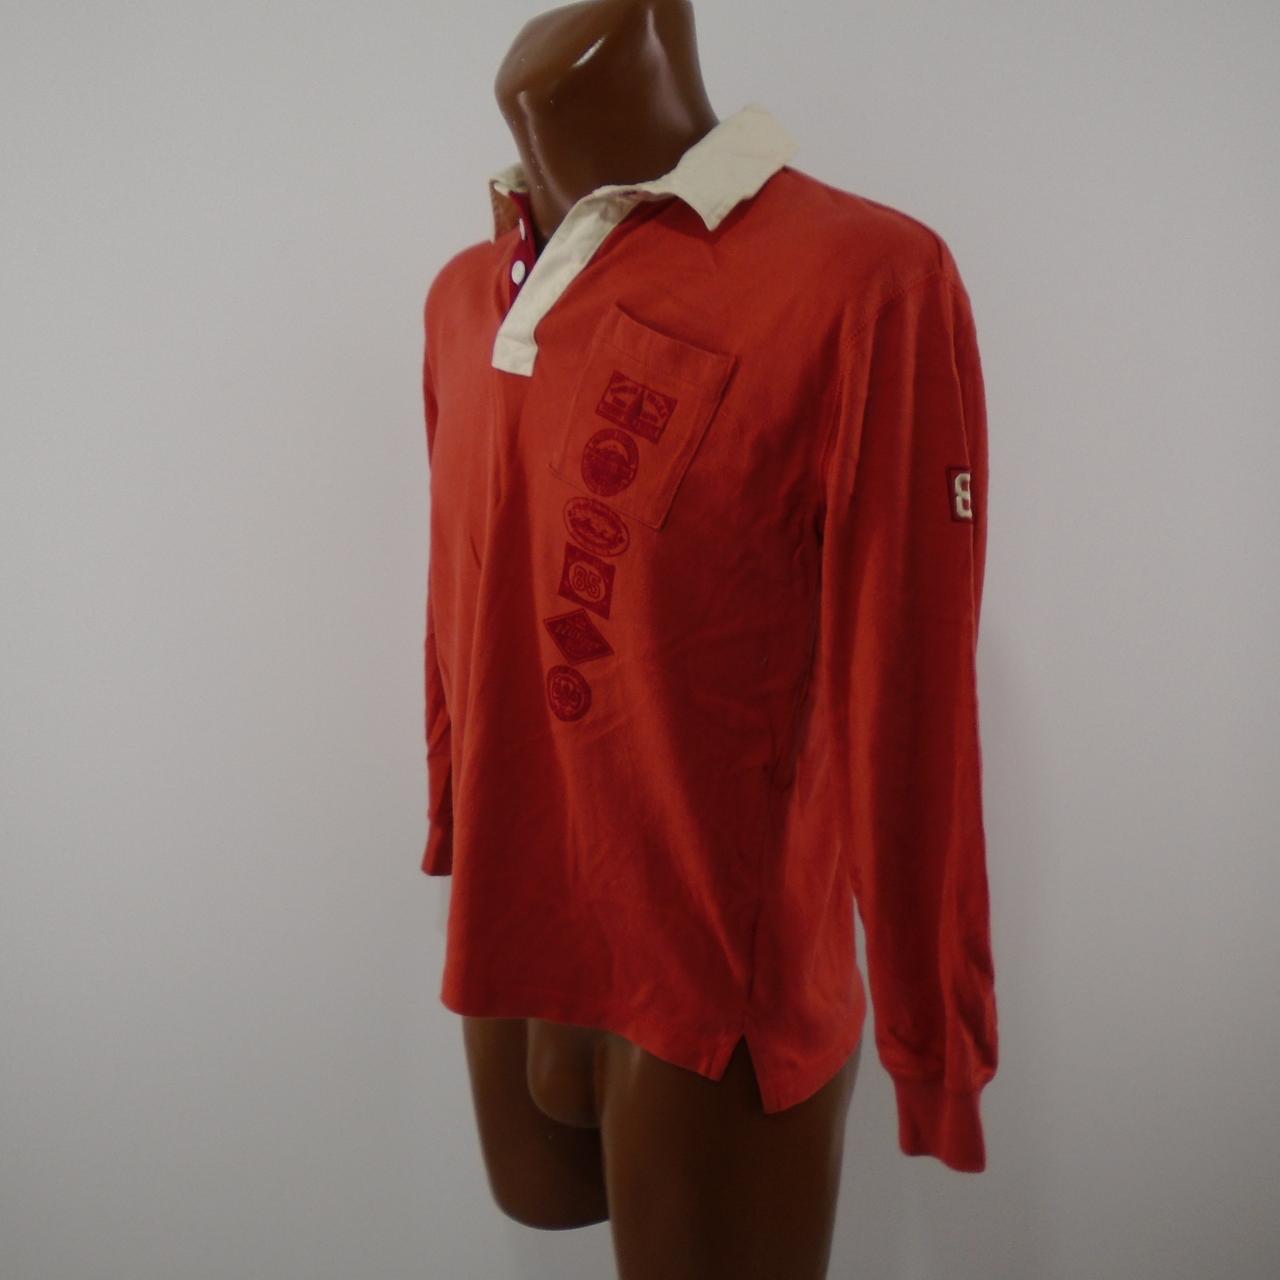 Men's Sweatshirt Tommy Hilfiger. Coral. S. Used. Good